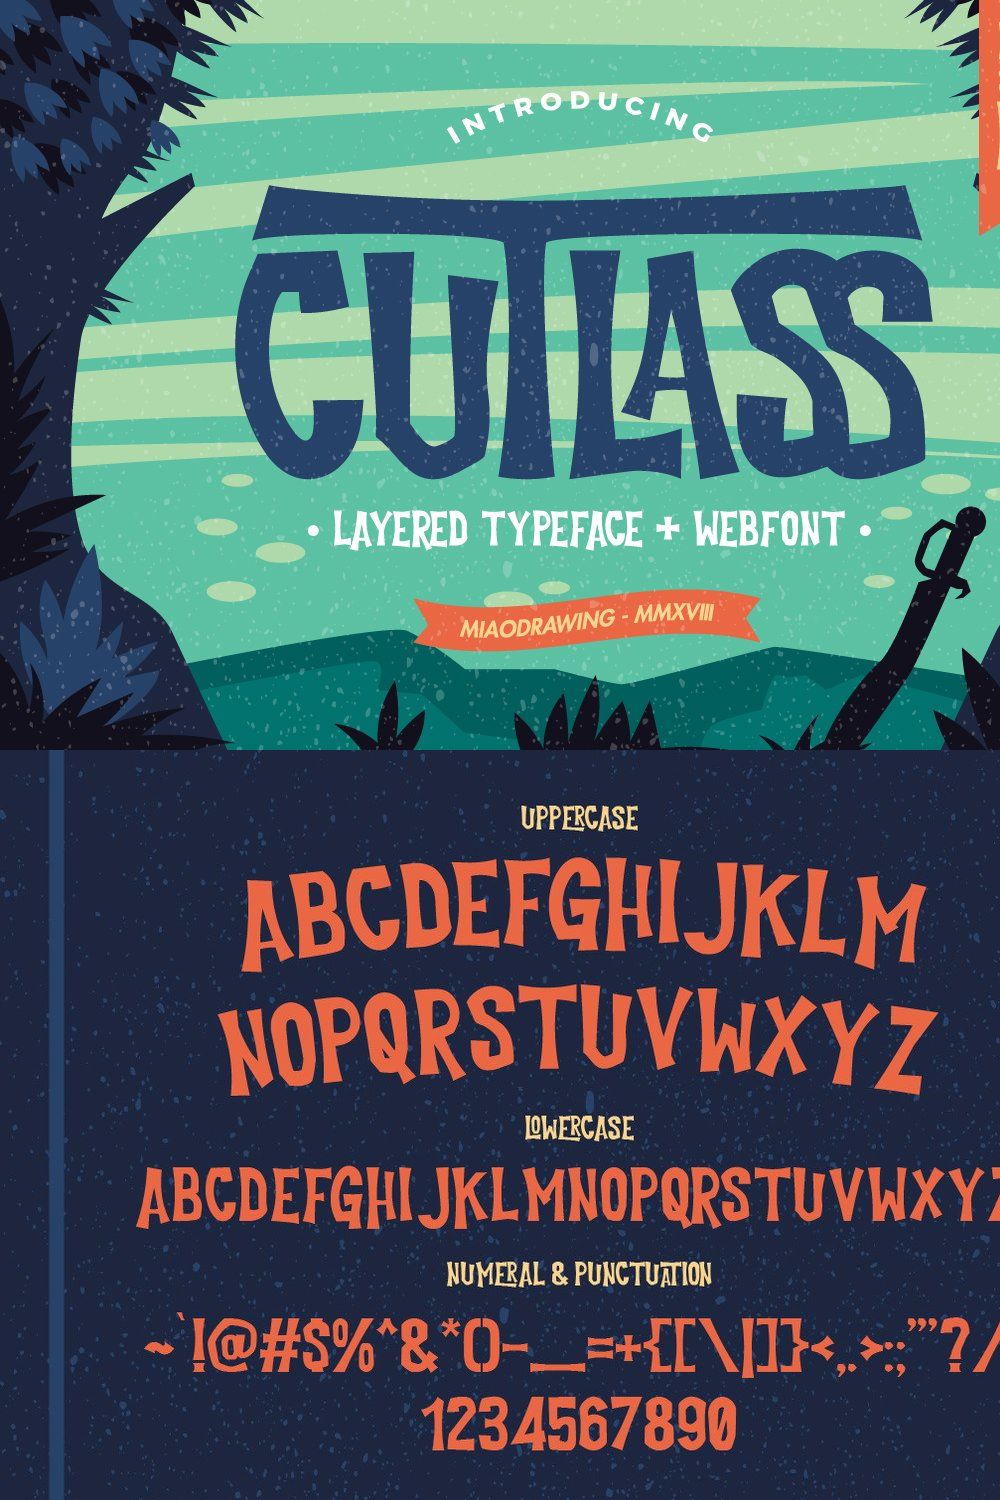 Cutlass Typeface + Bonus pinterest preview image.